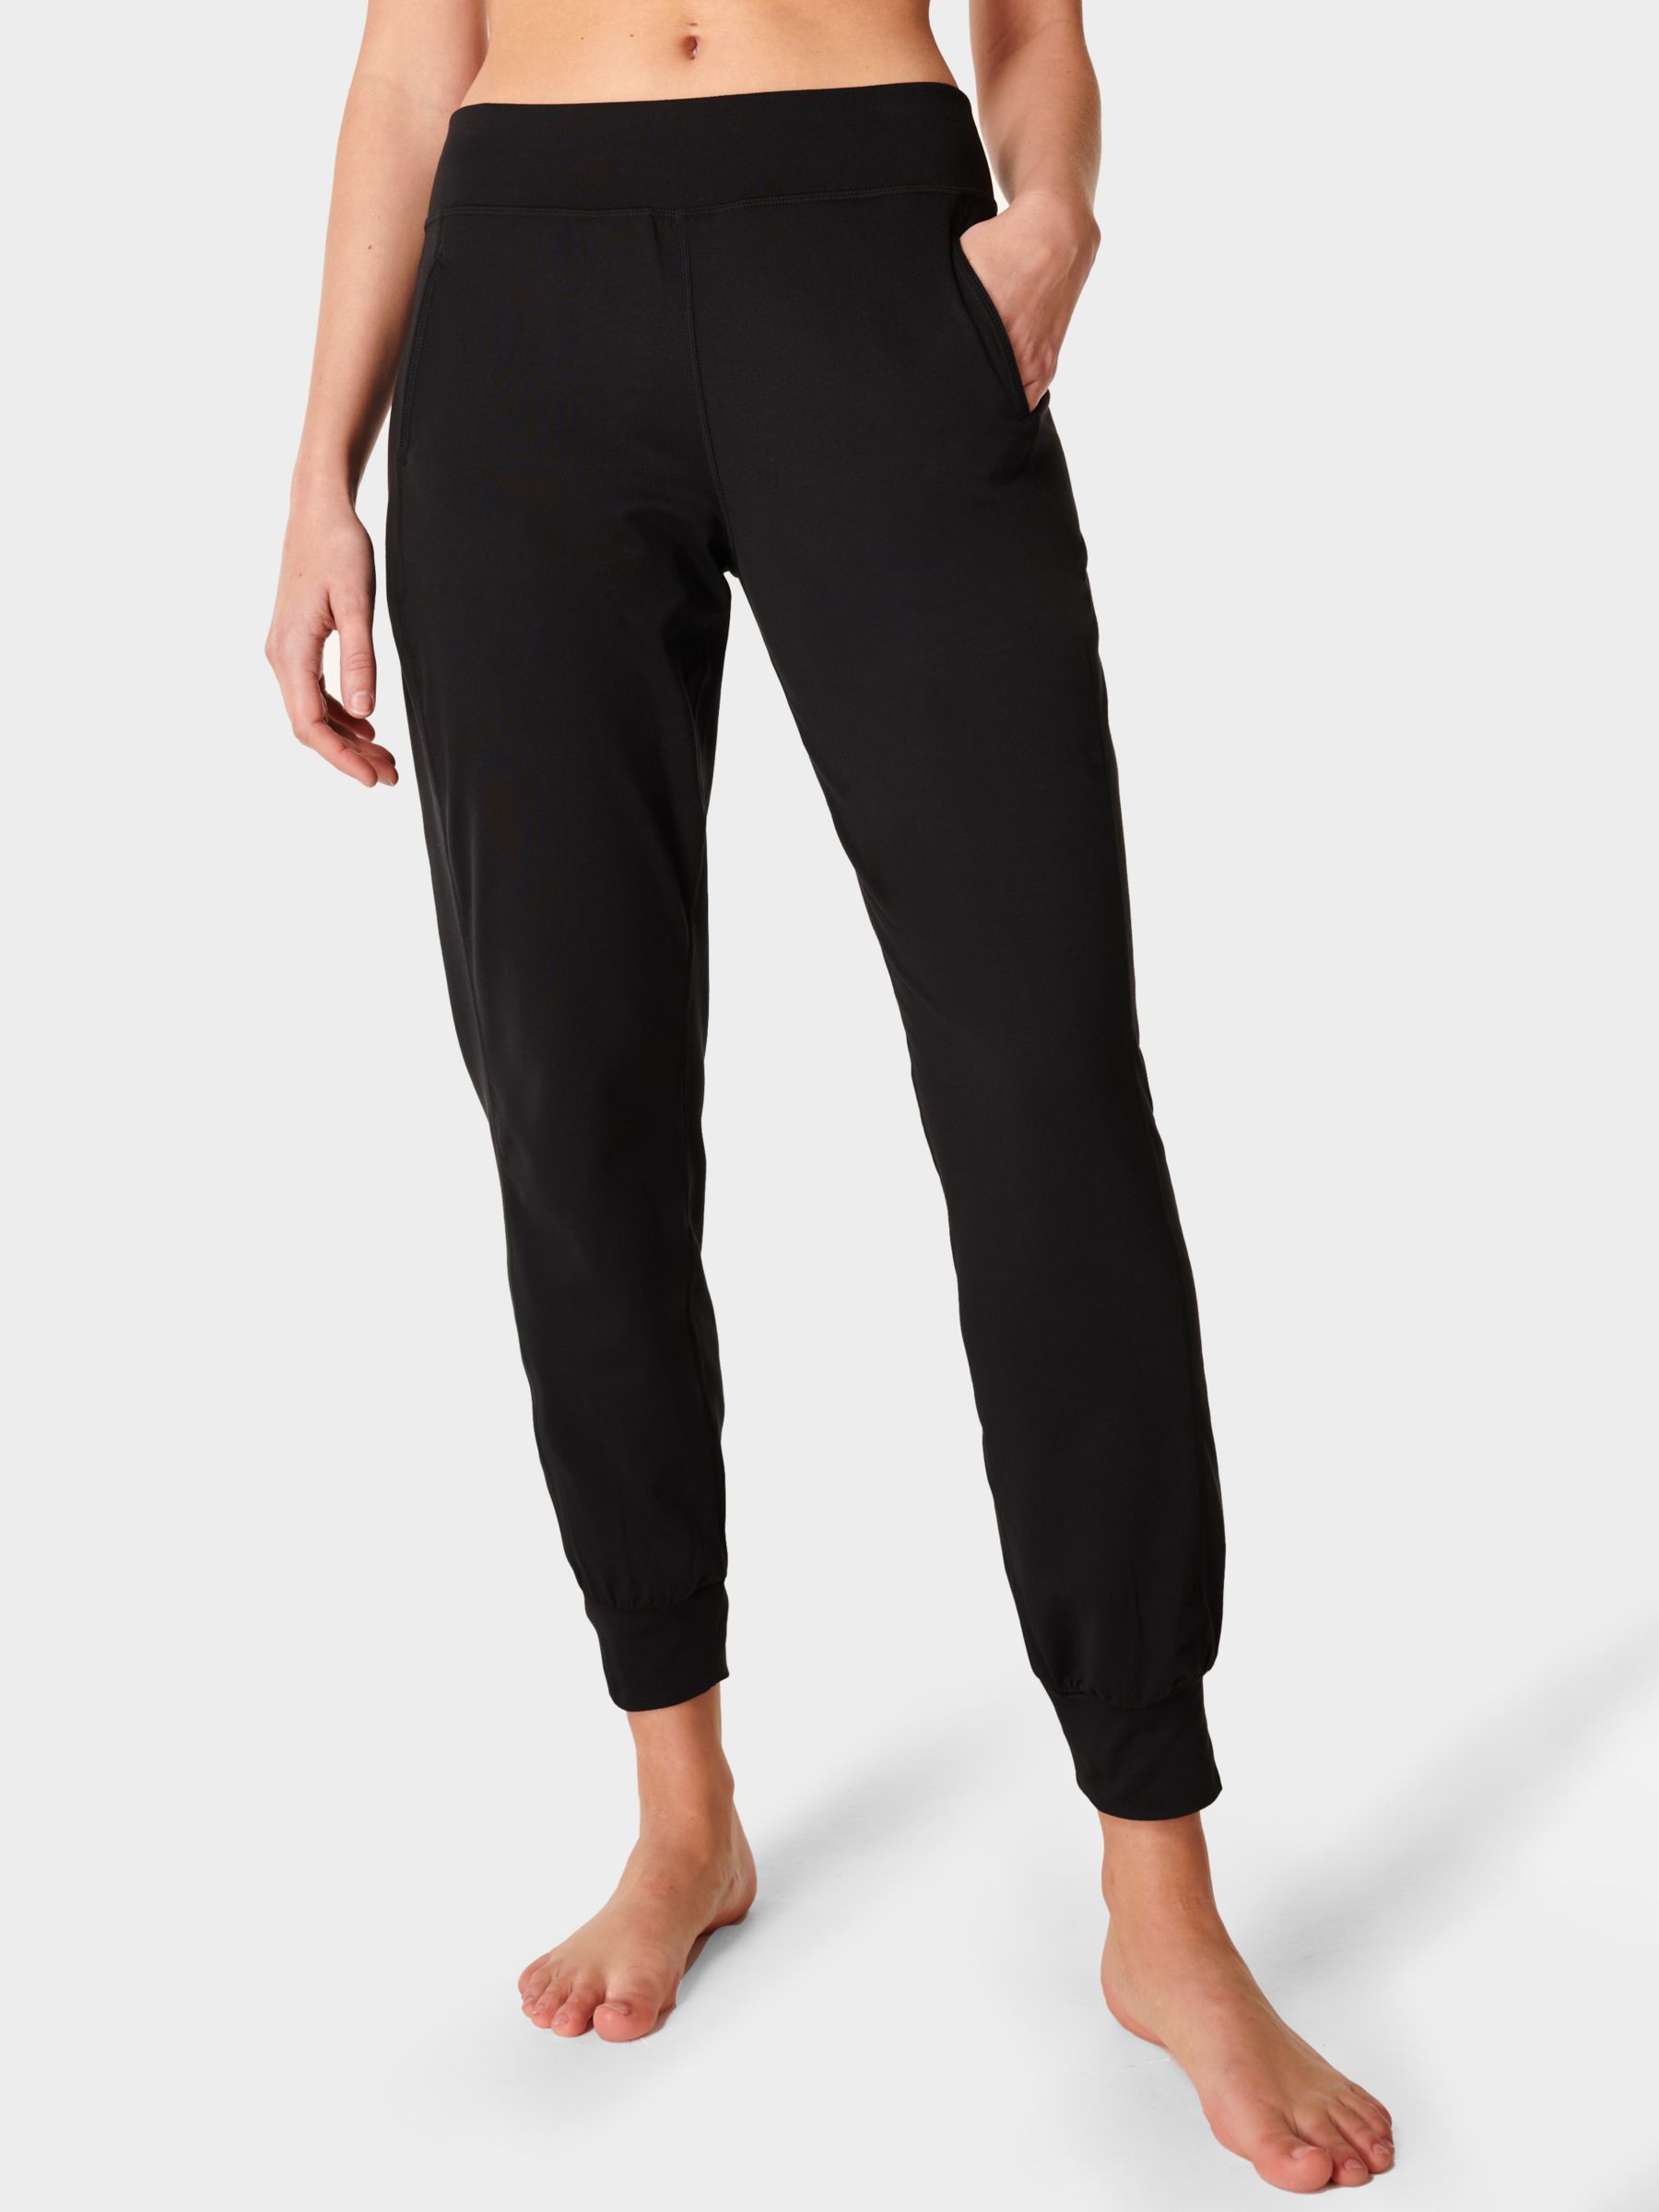 Sweaty Betty Gary 29 Yoga Pants, Black, XXS